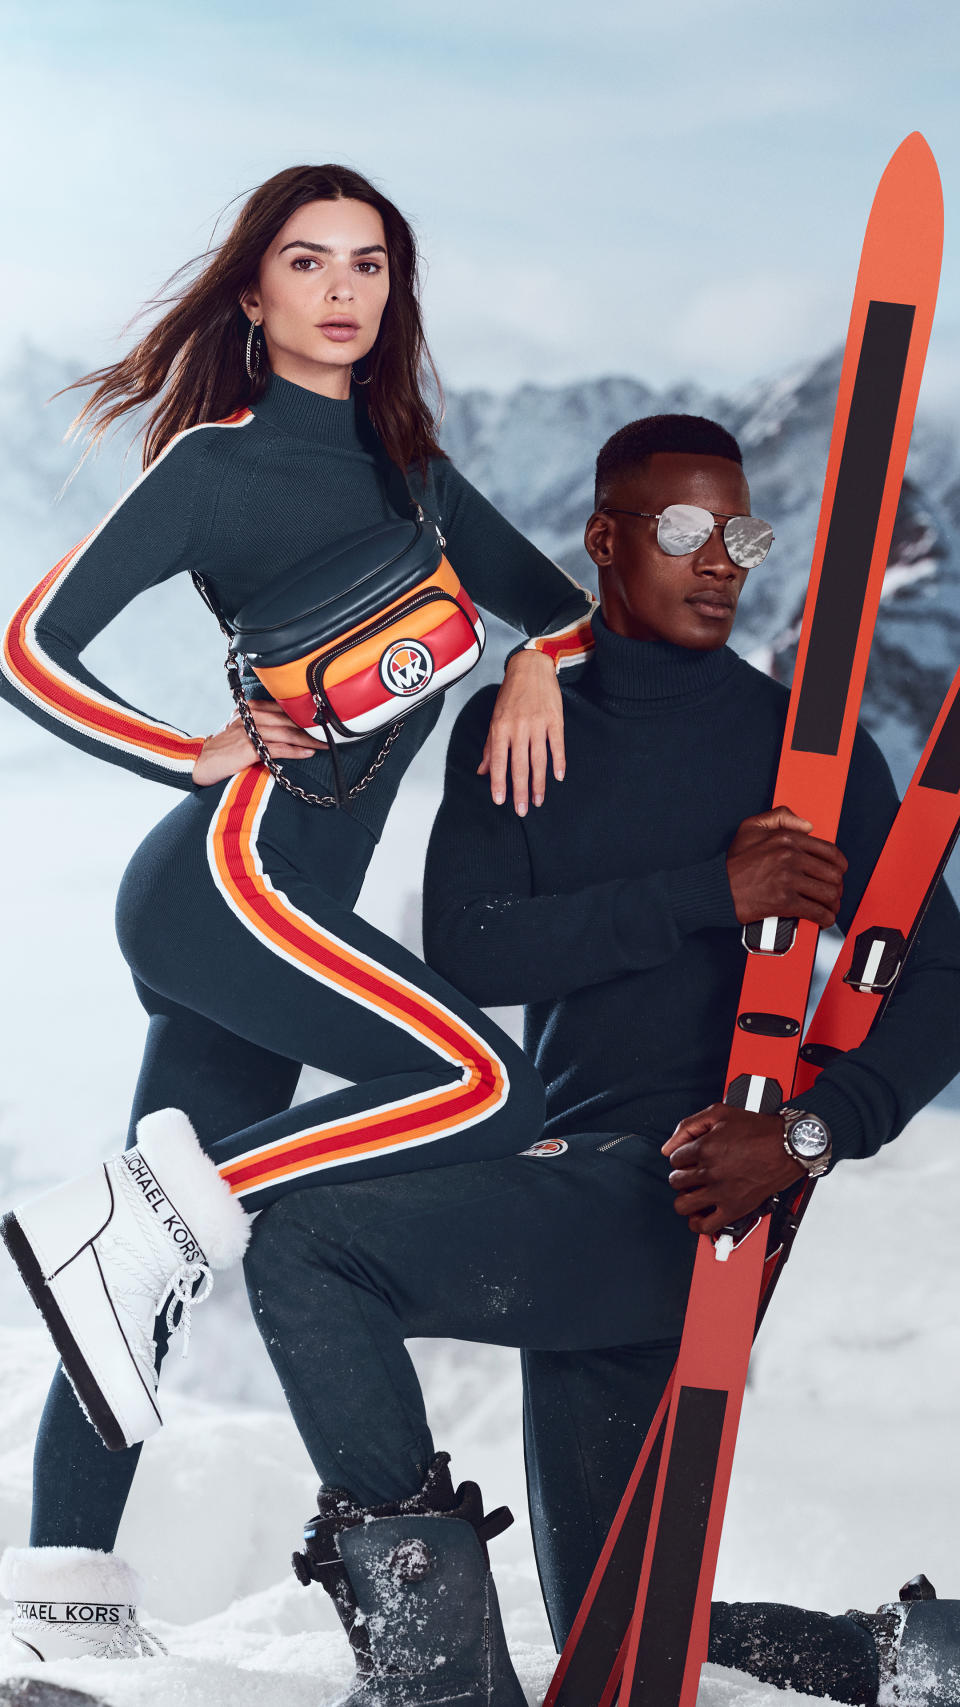 A campaign image featuring Emily Ratajkowski and model David Agbodji.